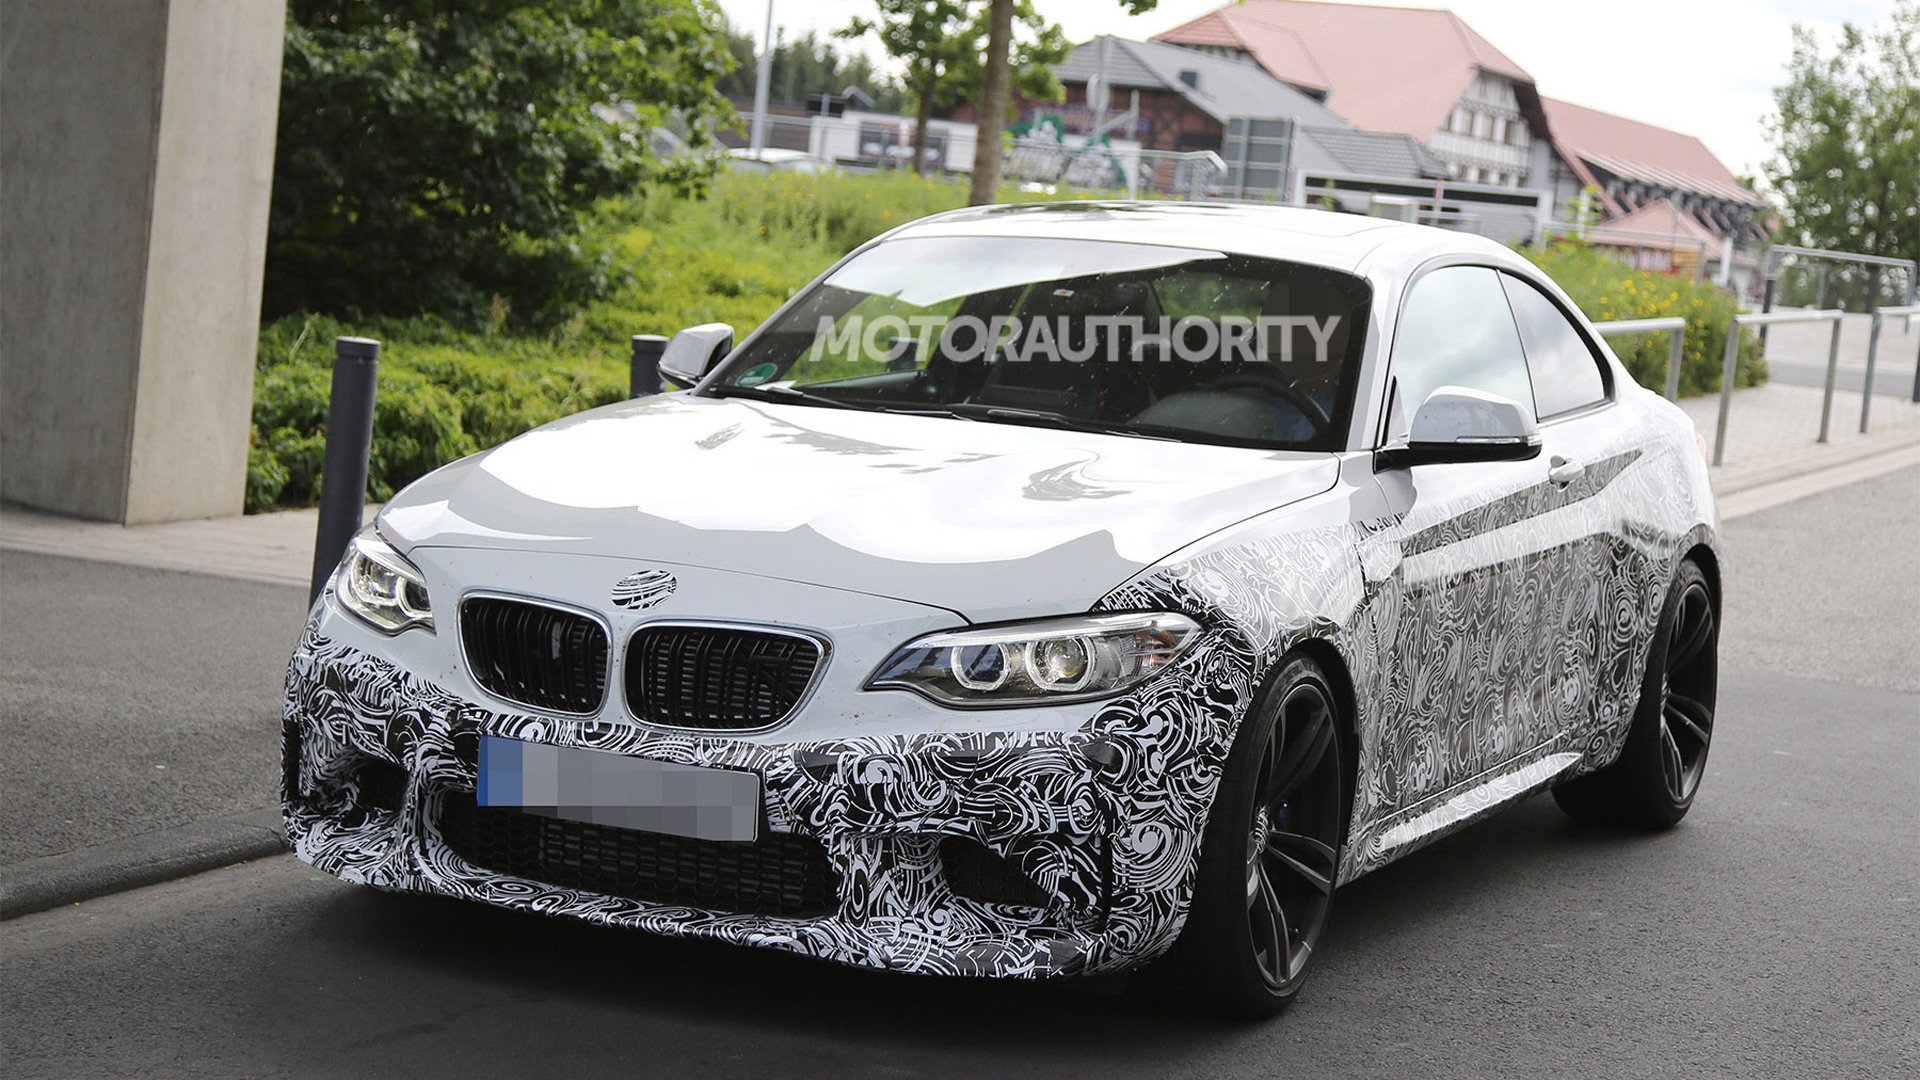 2016 BMW M2 spy shots - Image via S. Baldauf/SB-Medien